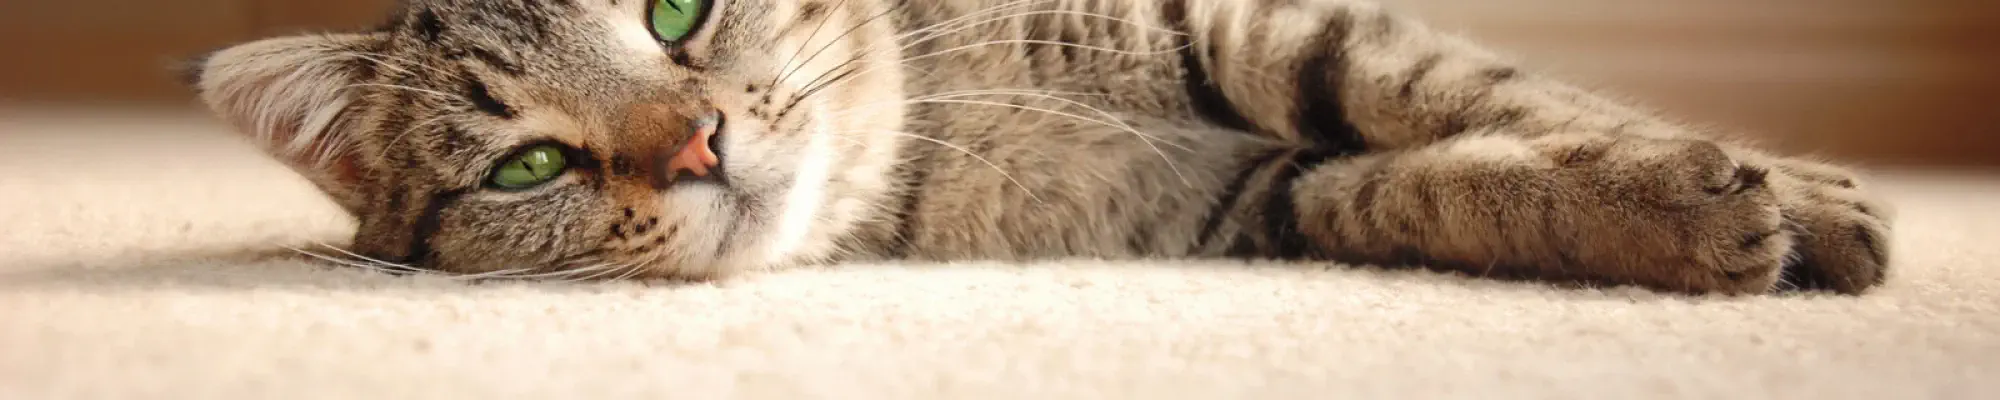 cute cat laying on plush carpet